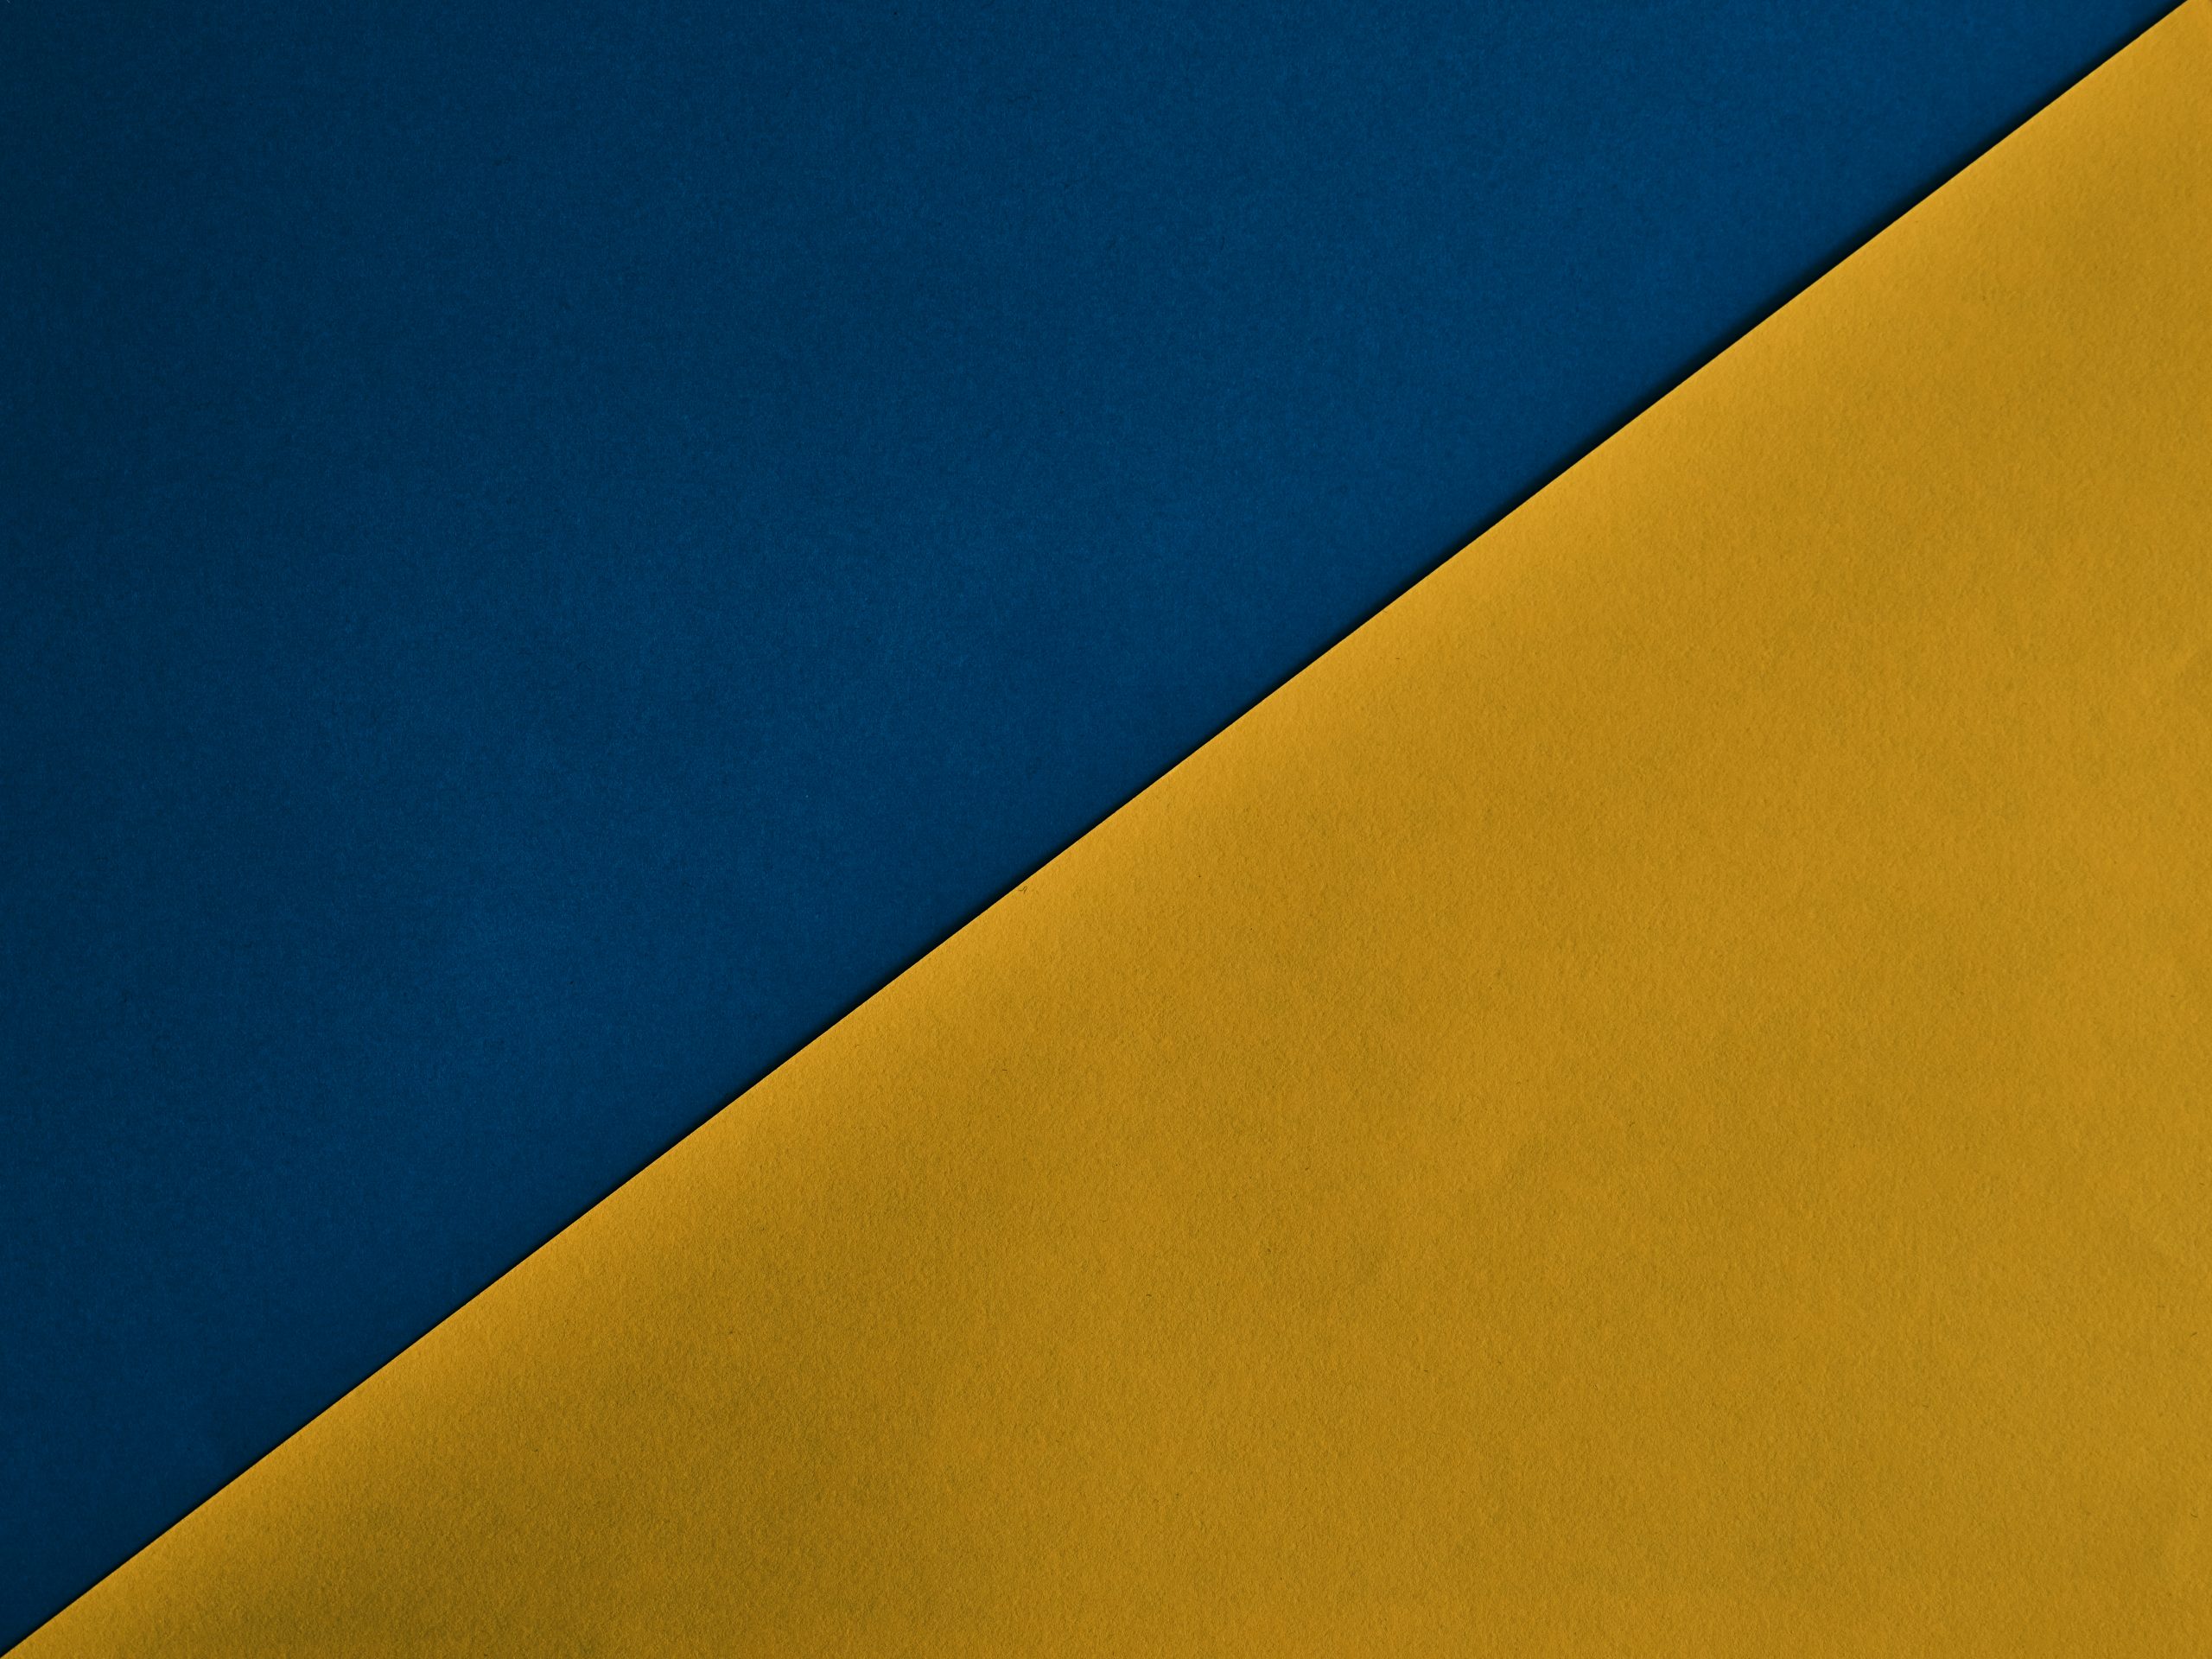 yellow and blue Ukrainian flag background